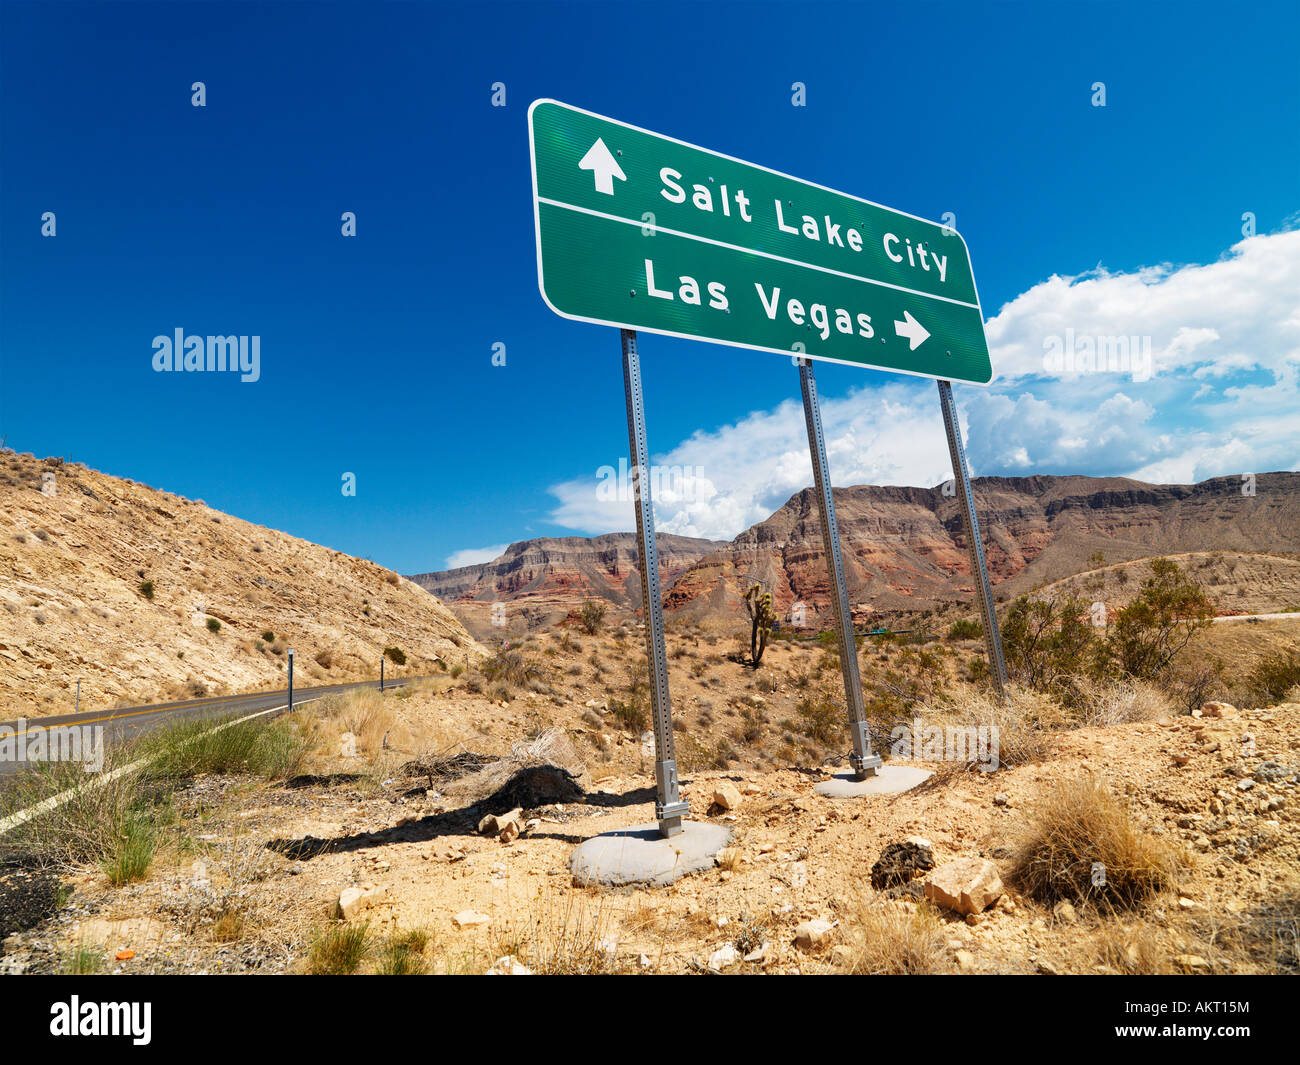 Road sign in desert pointing towards Salt Lake City and Las Vegas Stock Photo